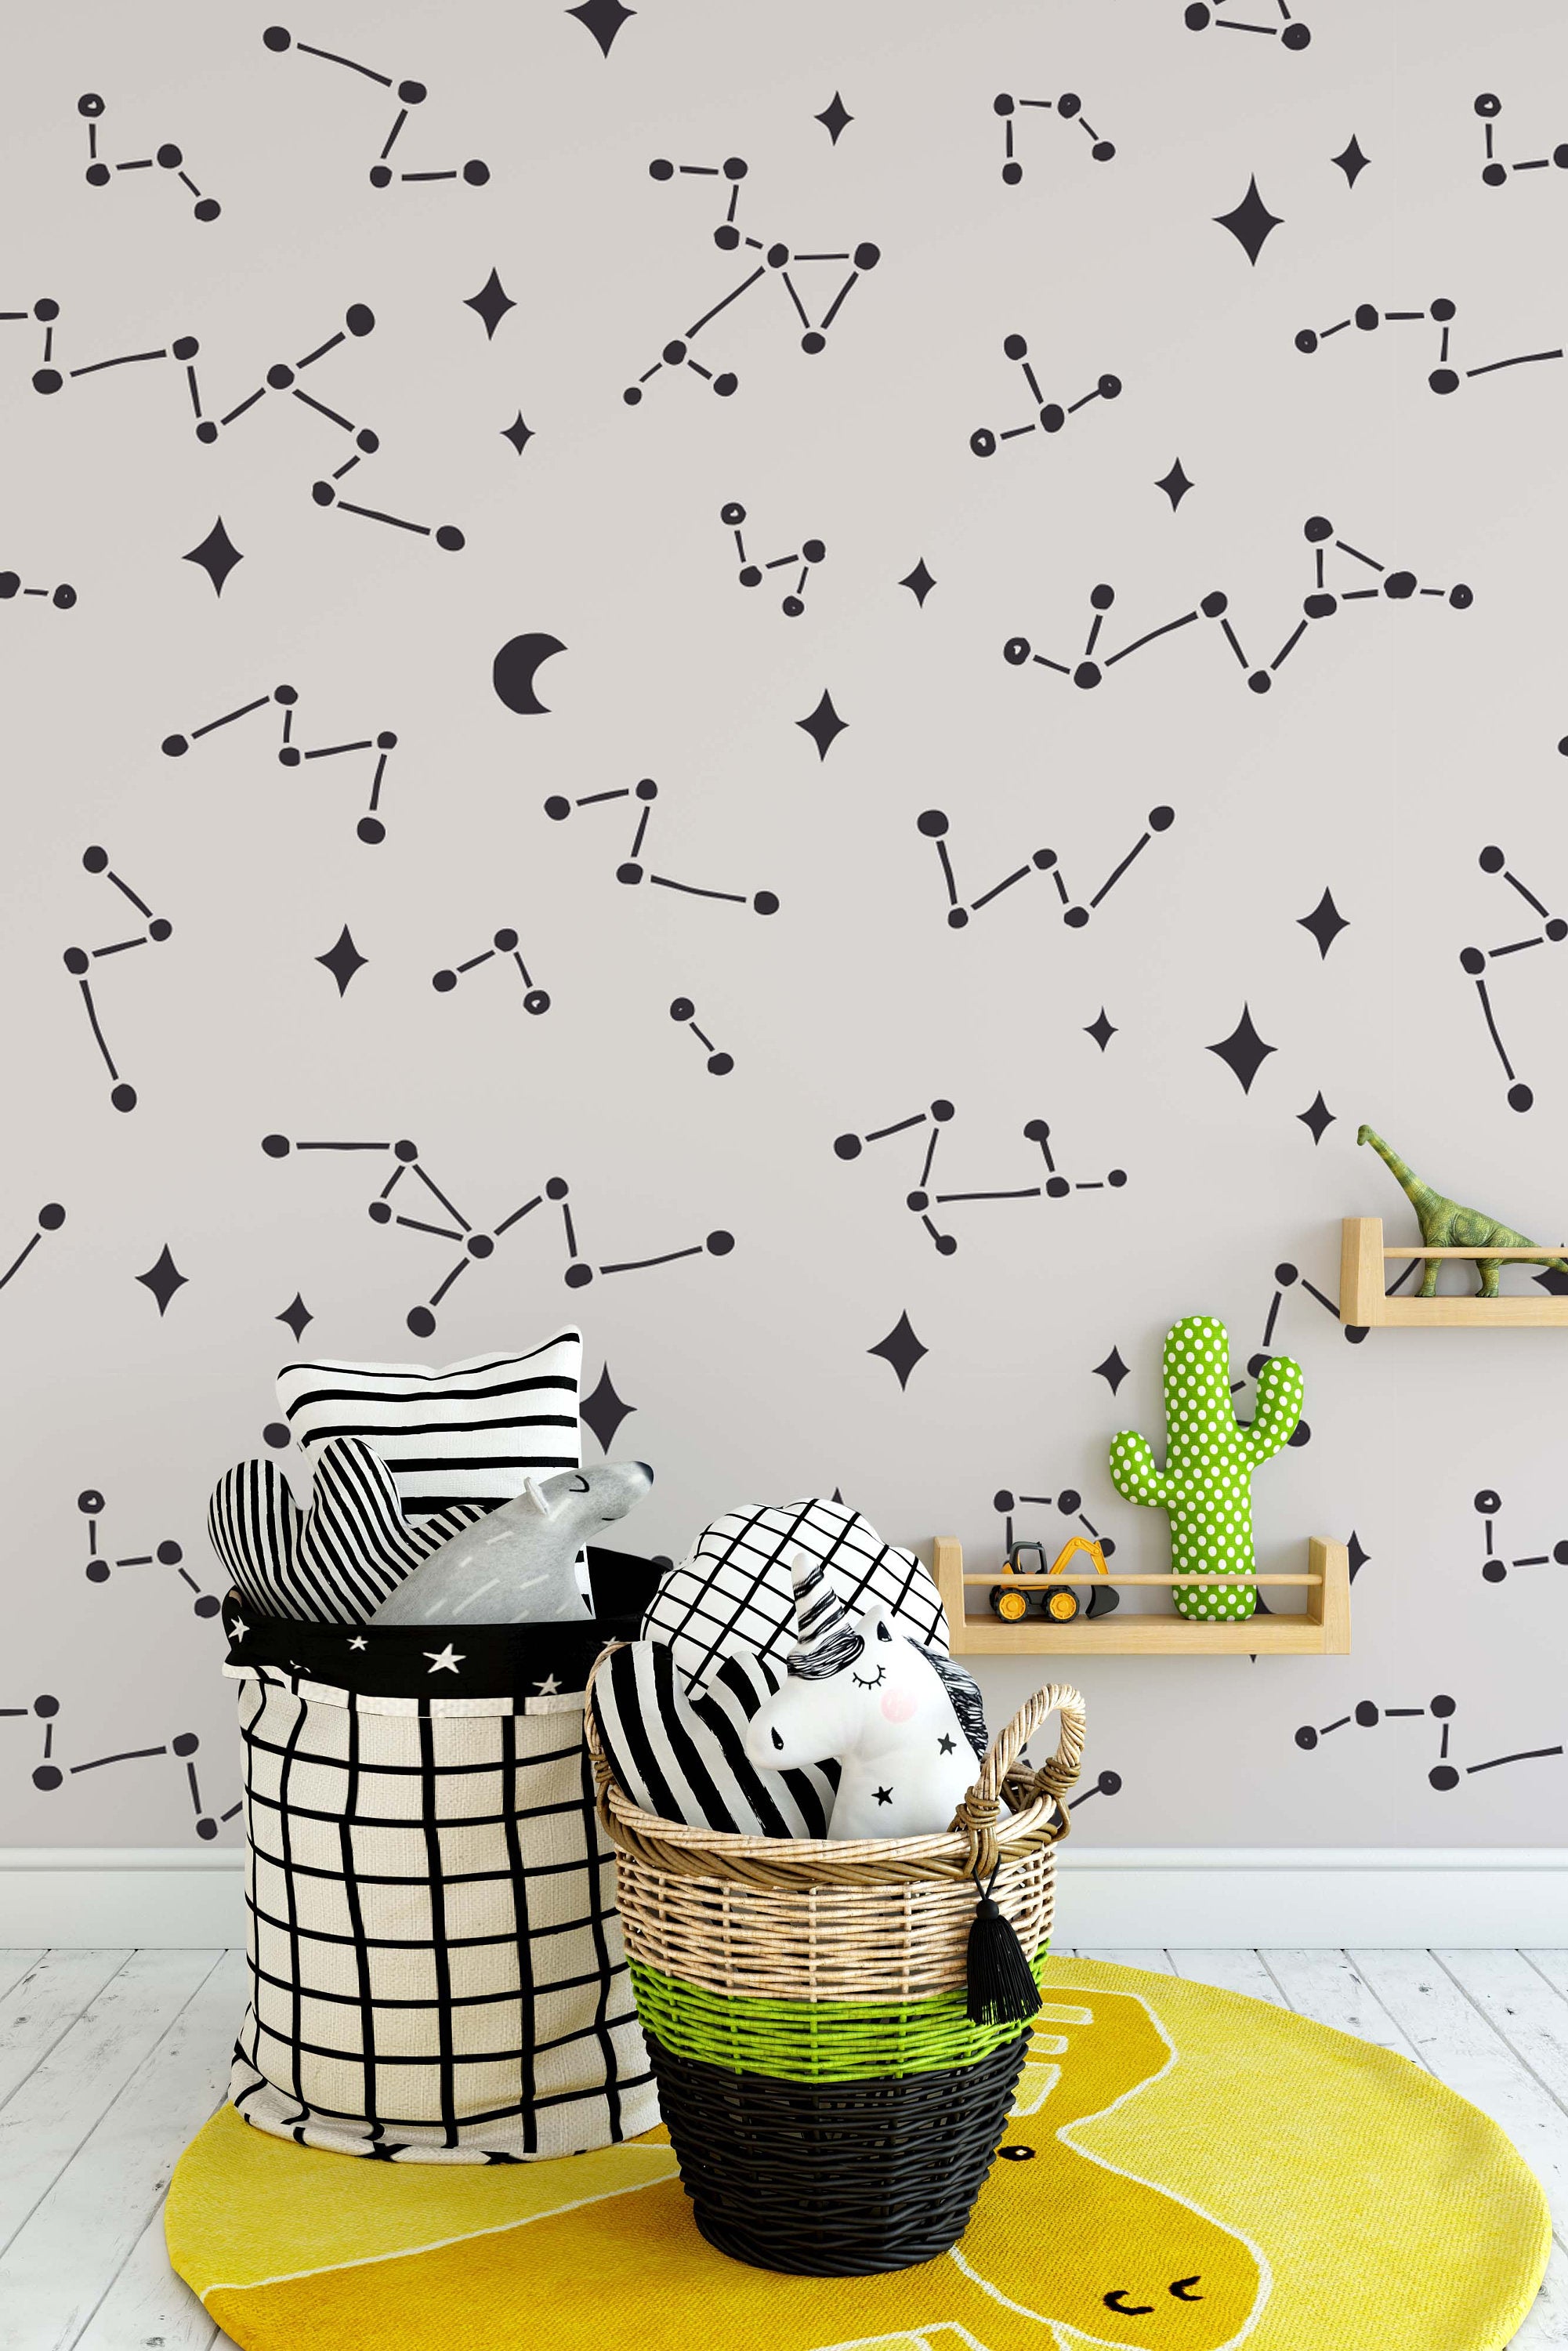 Abstract Constellations Pattern Background Wallpaper Nursery Children Kids Room Mural Home Decor Wall Art